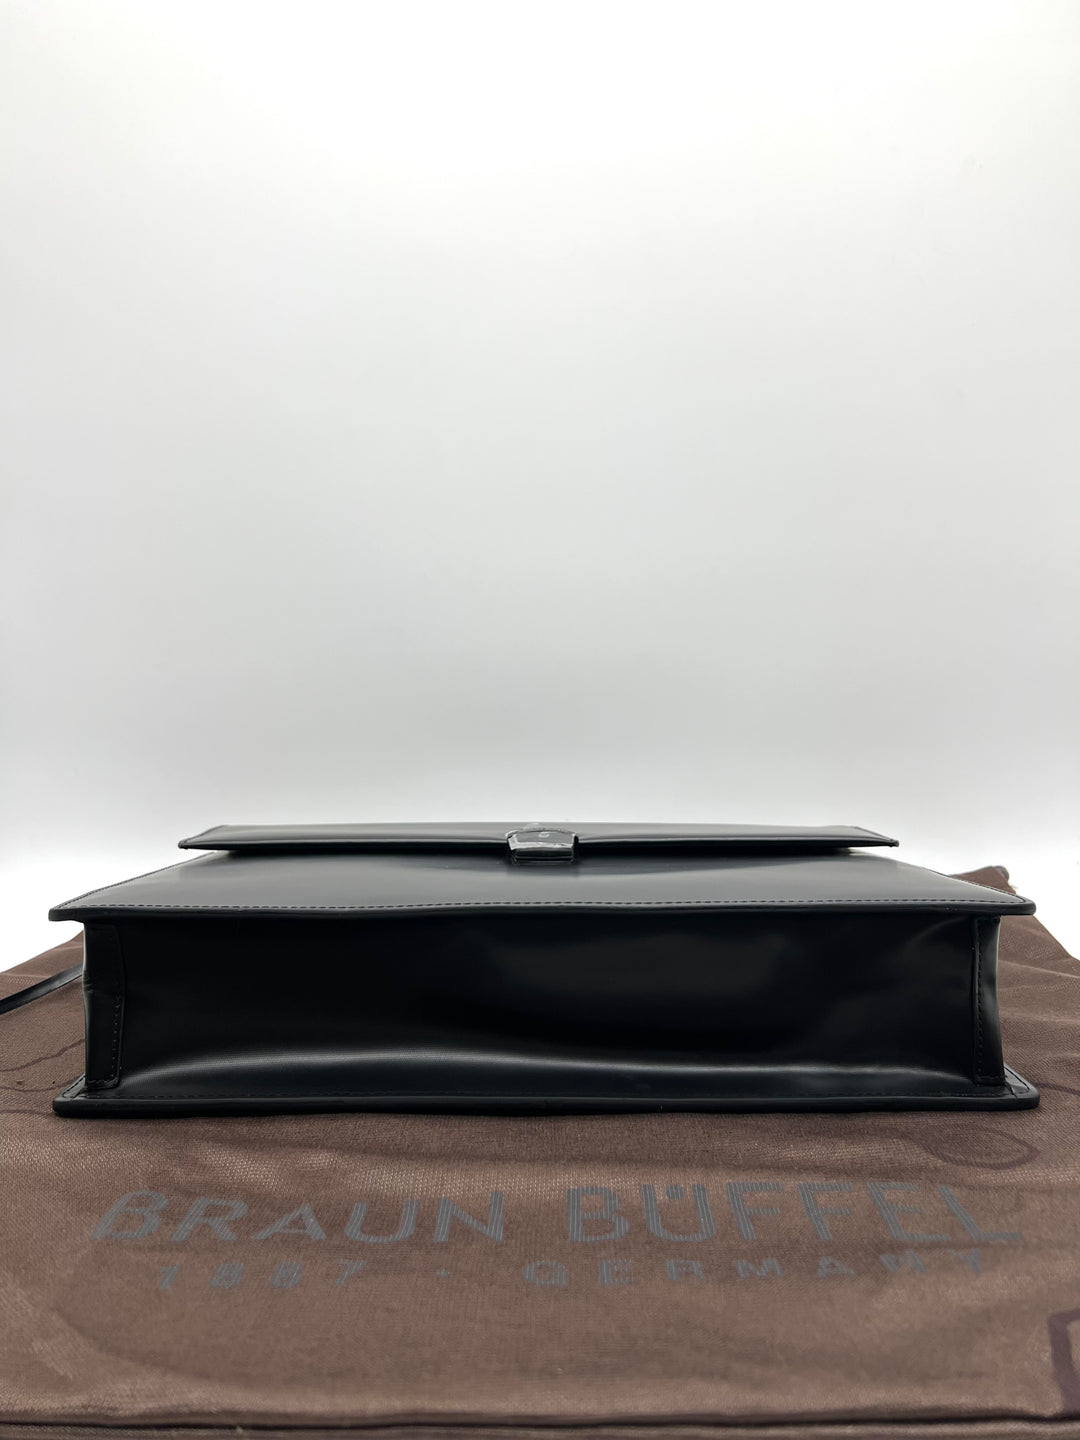 Braun Buffel Black Color Briefcase Bag (not LV/Cartier/Mont Blanc)